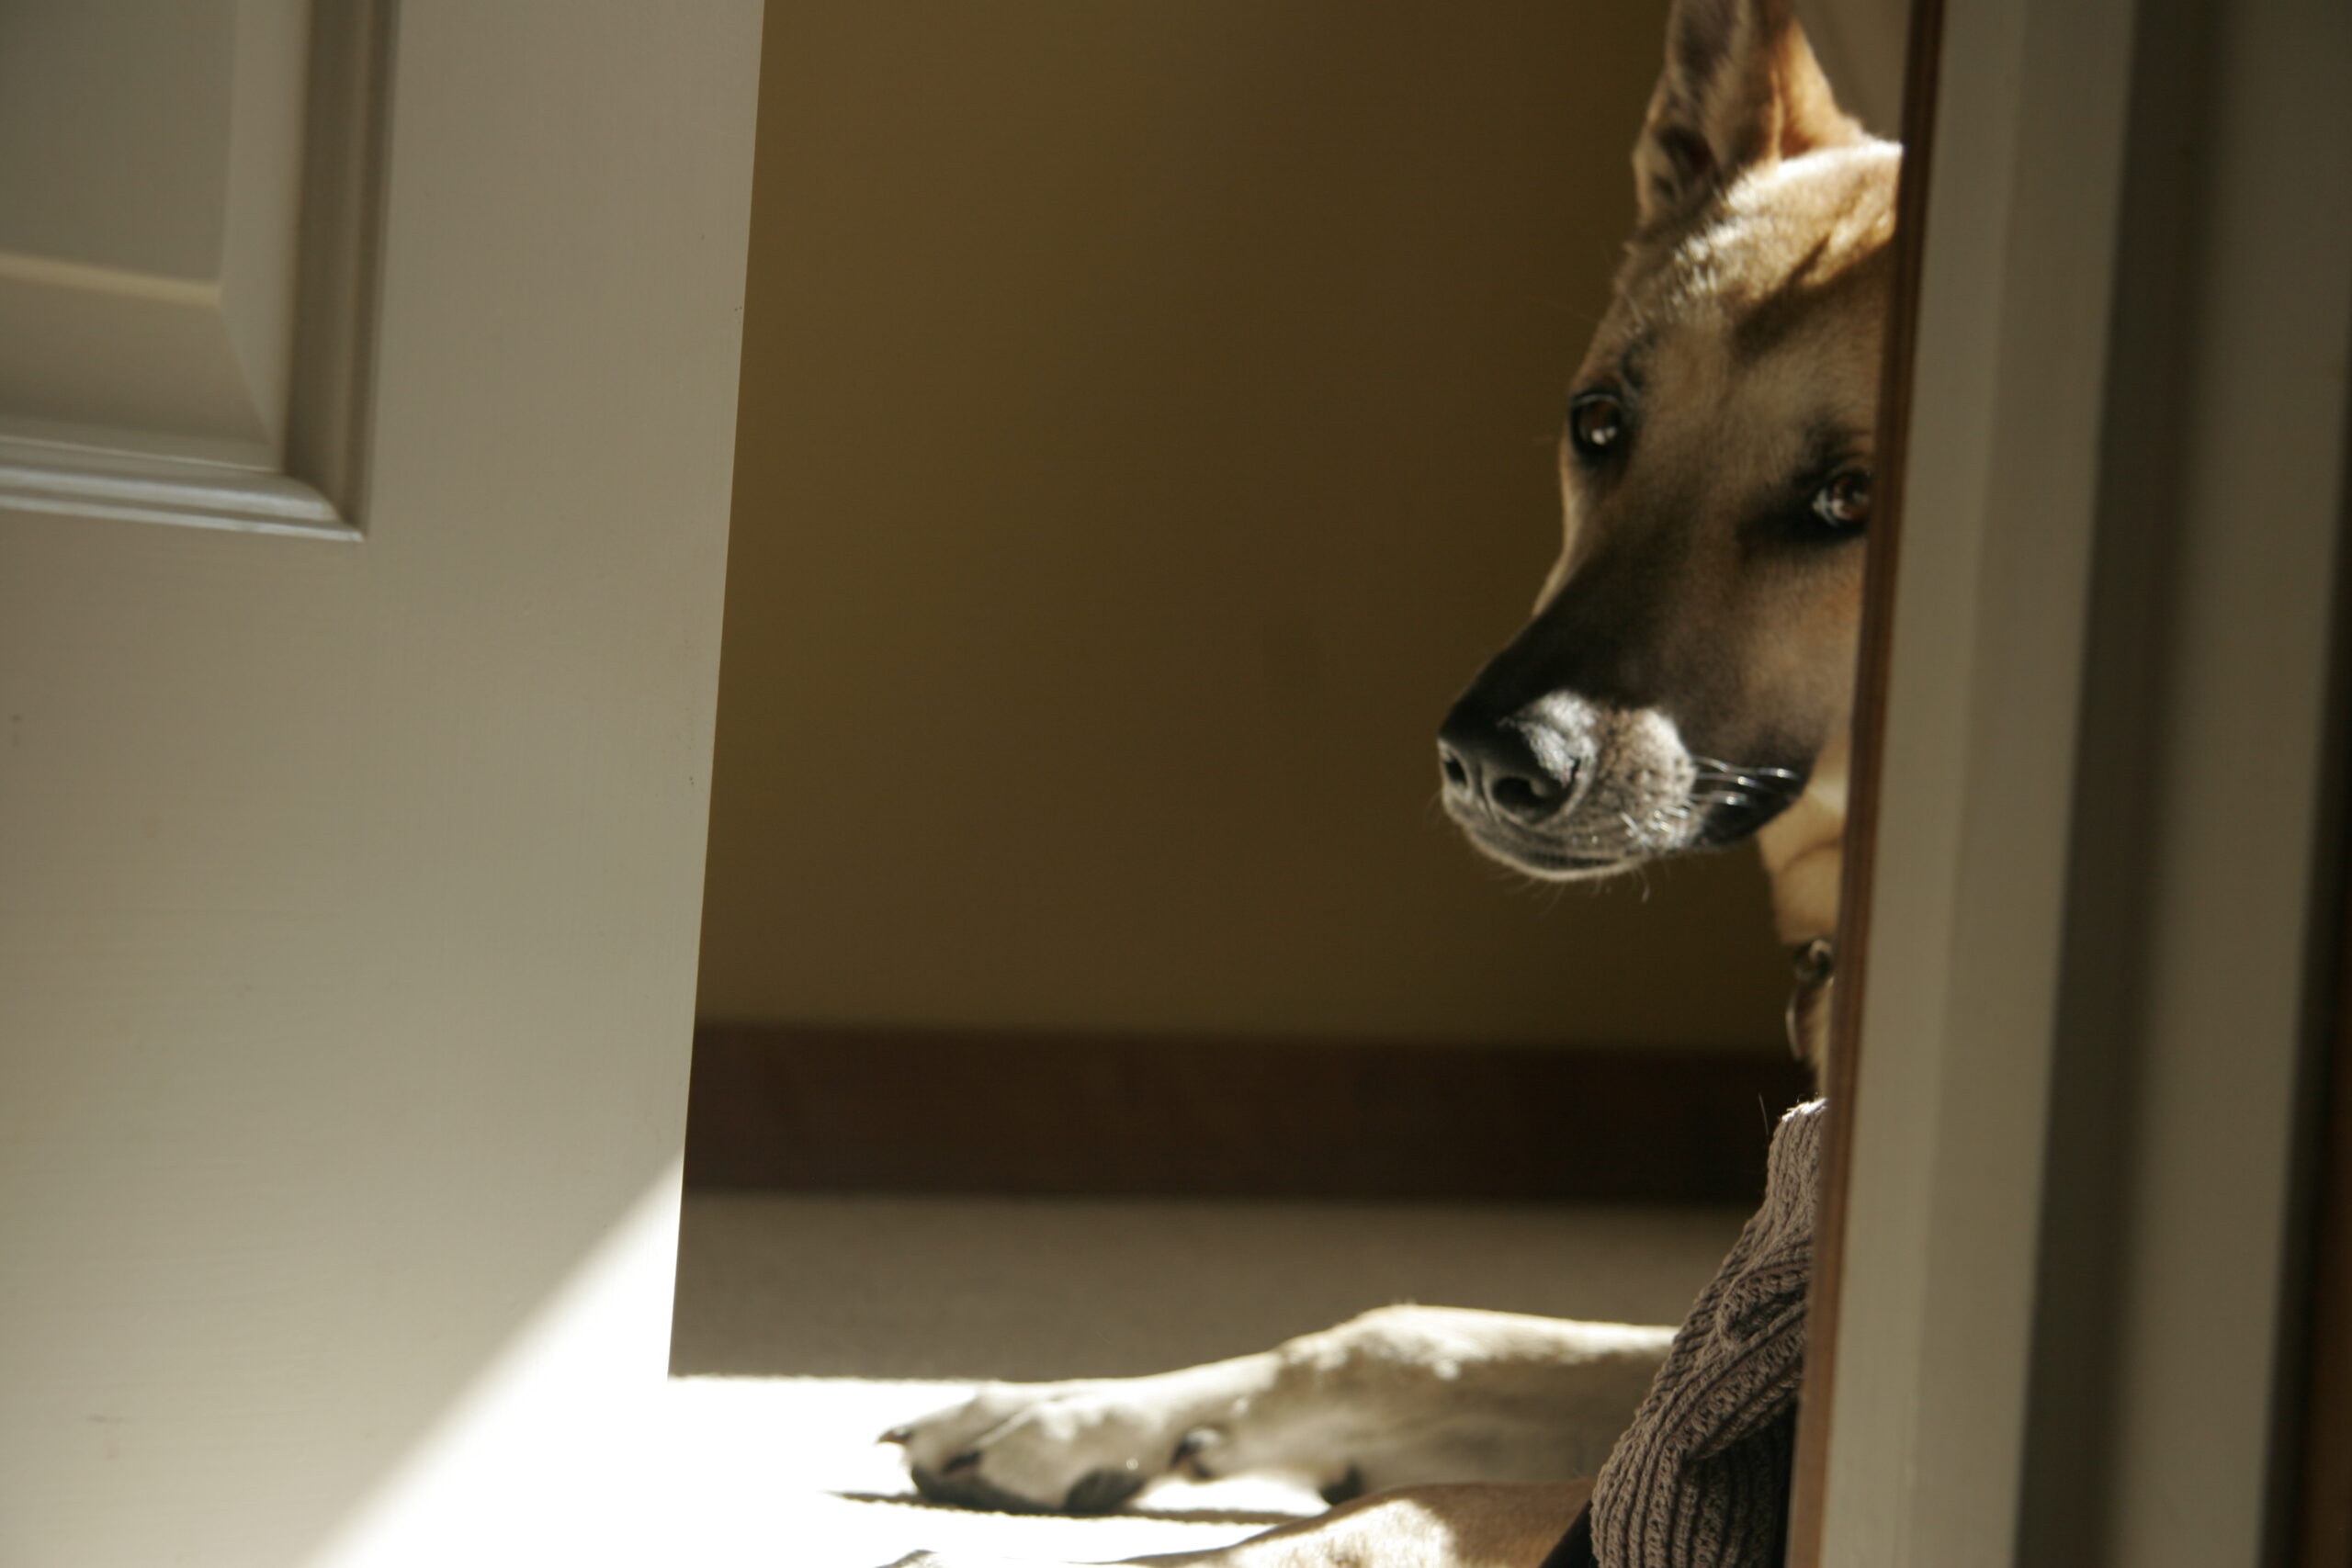 A dog peeking out of a door.